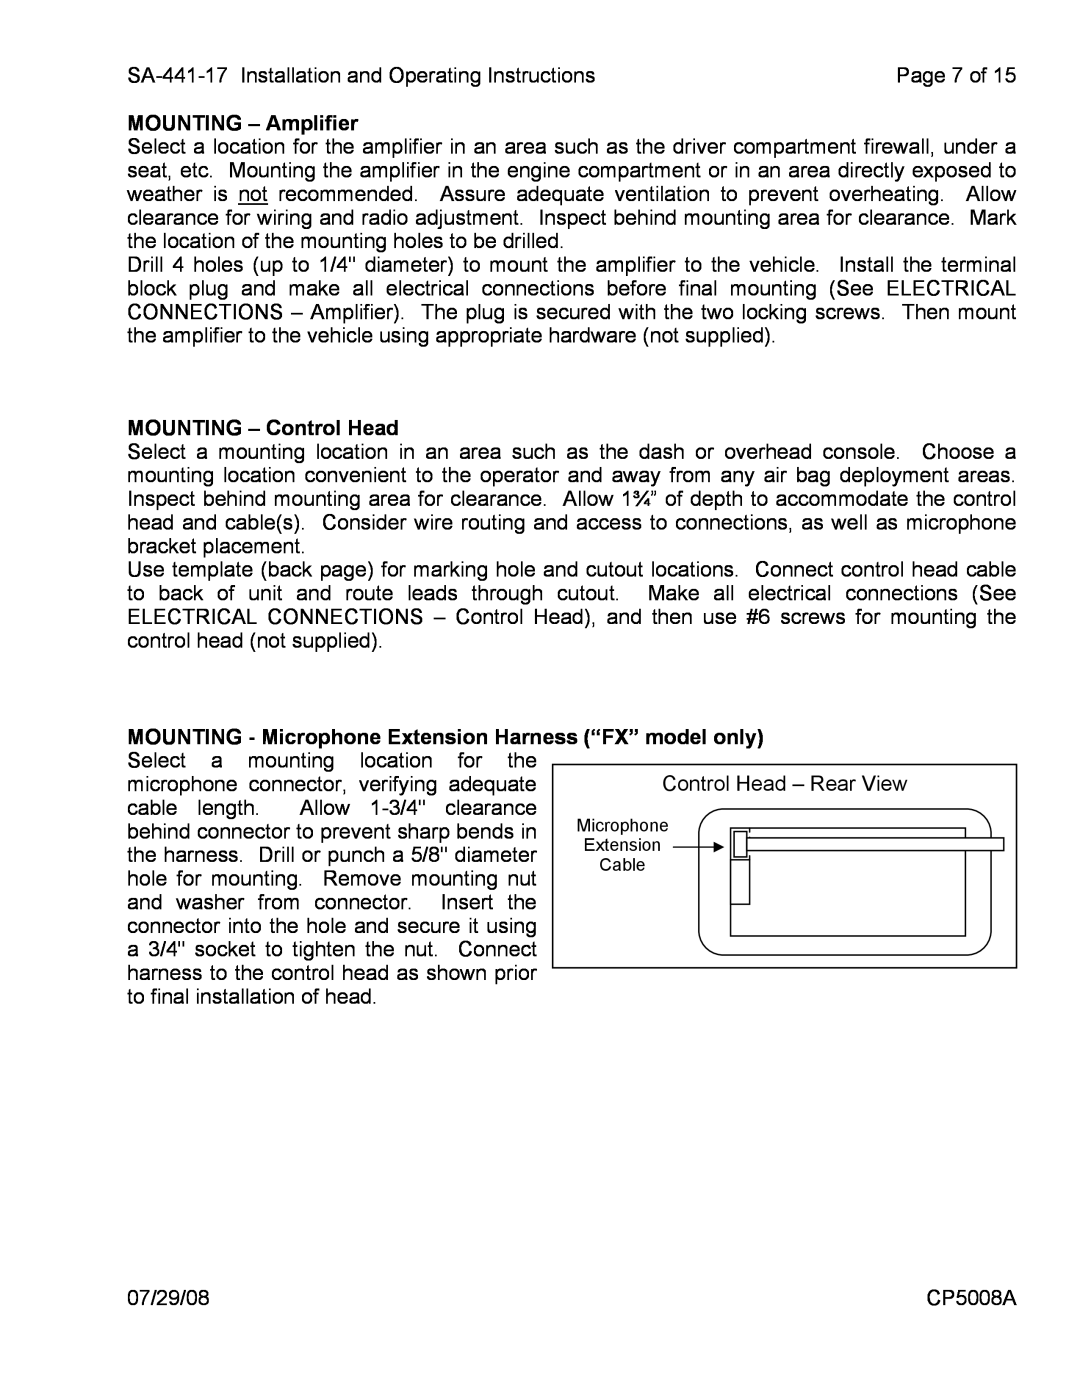 Carson SA-441-17 manual MOUNTING - Amplifier, MOUNTING - Control Head 